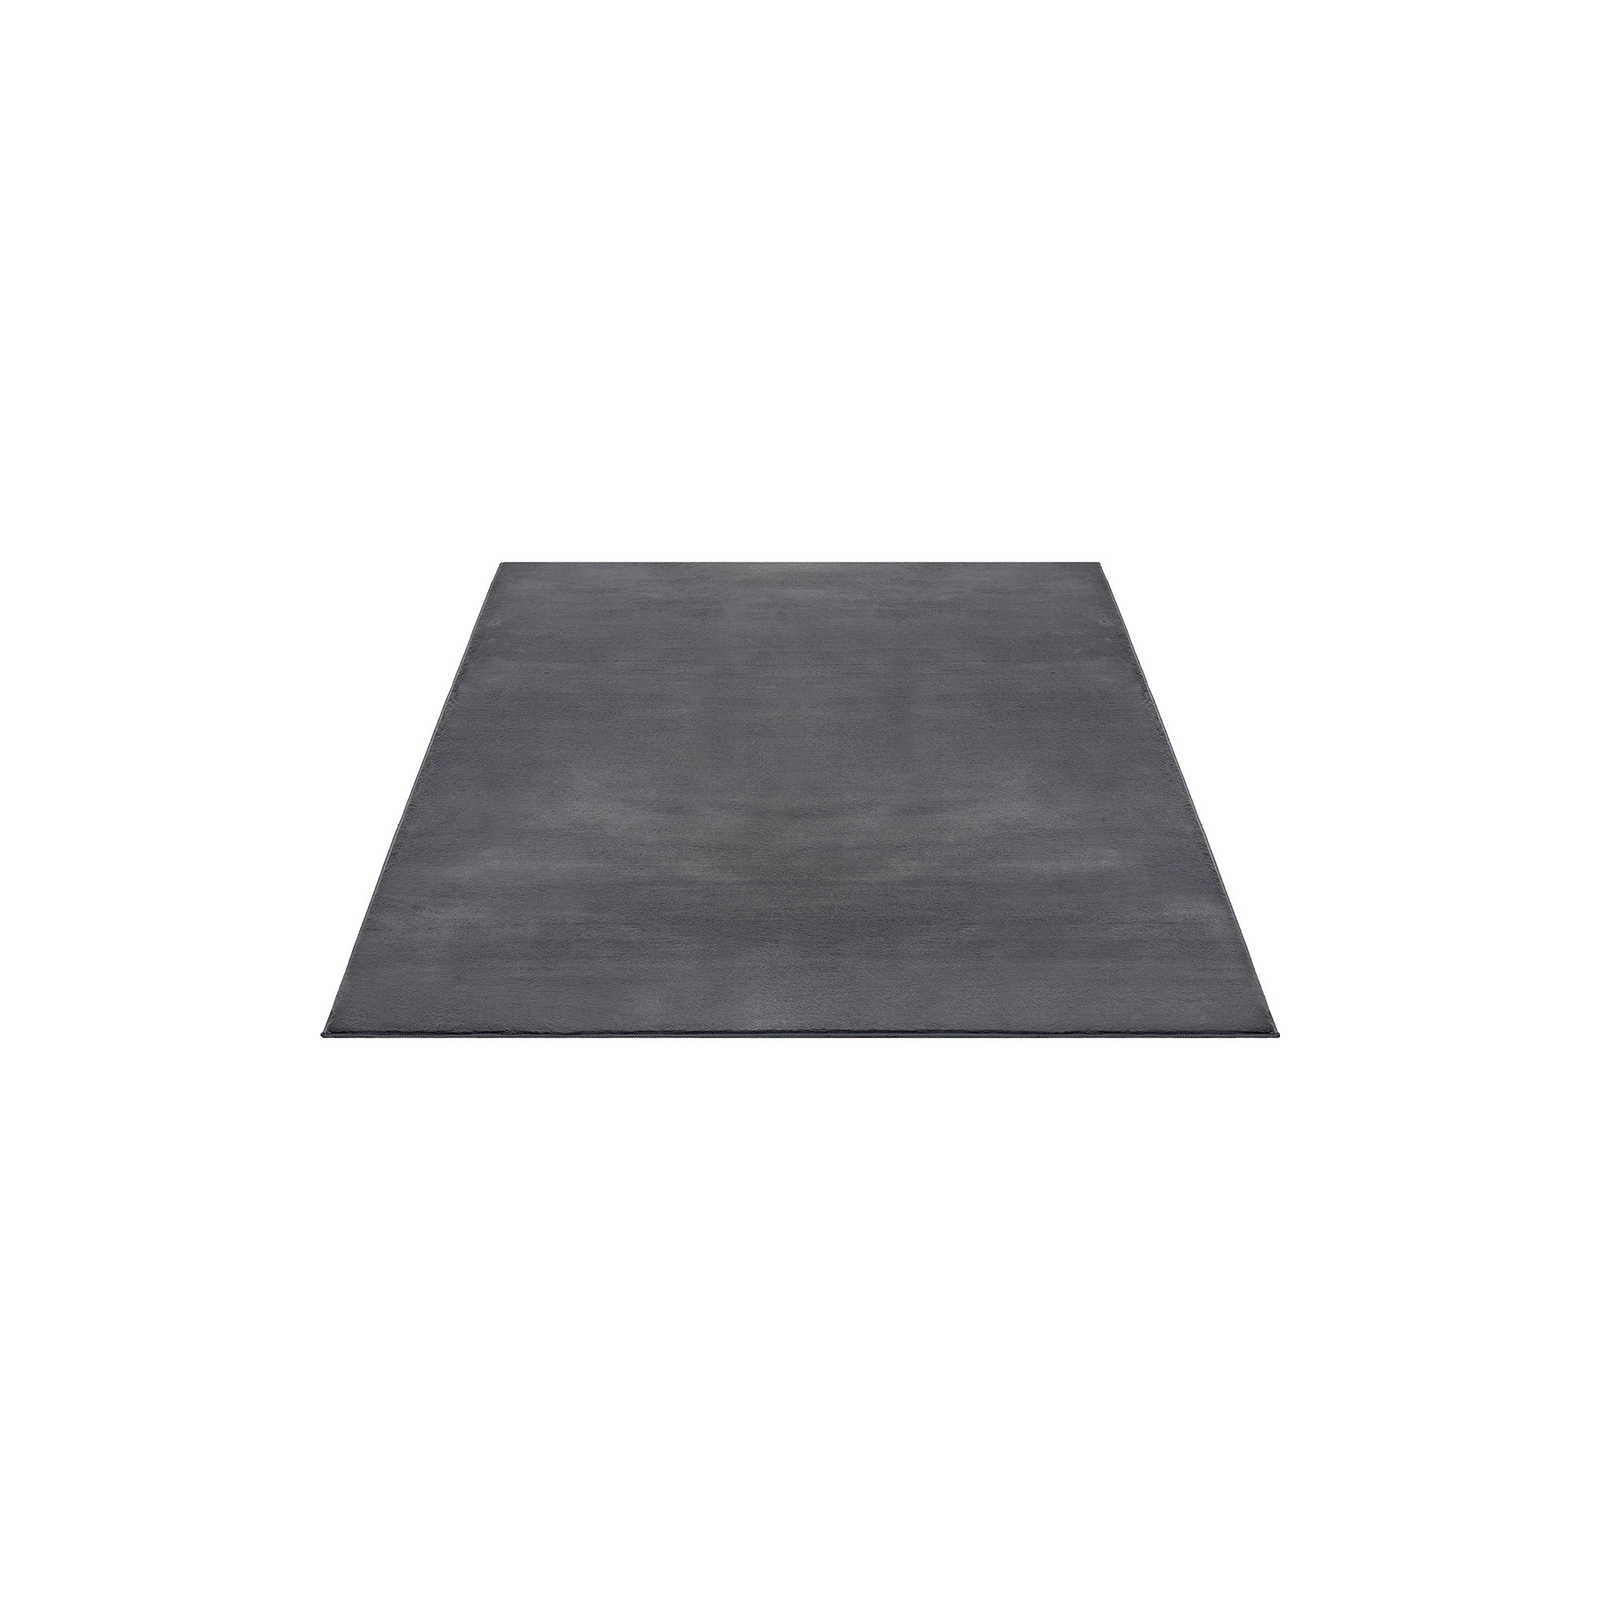 Soft high pile carpet in anthracite - 200 x 140 cm
